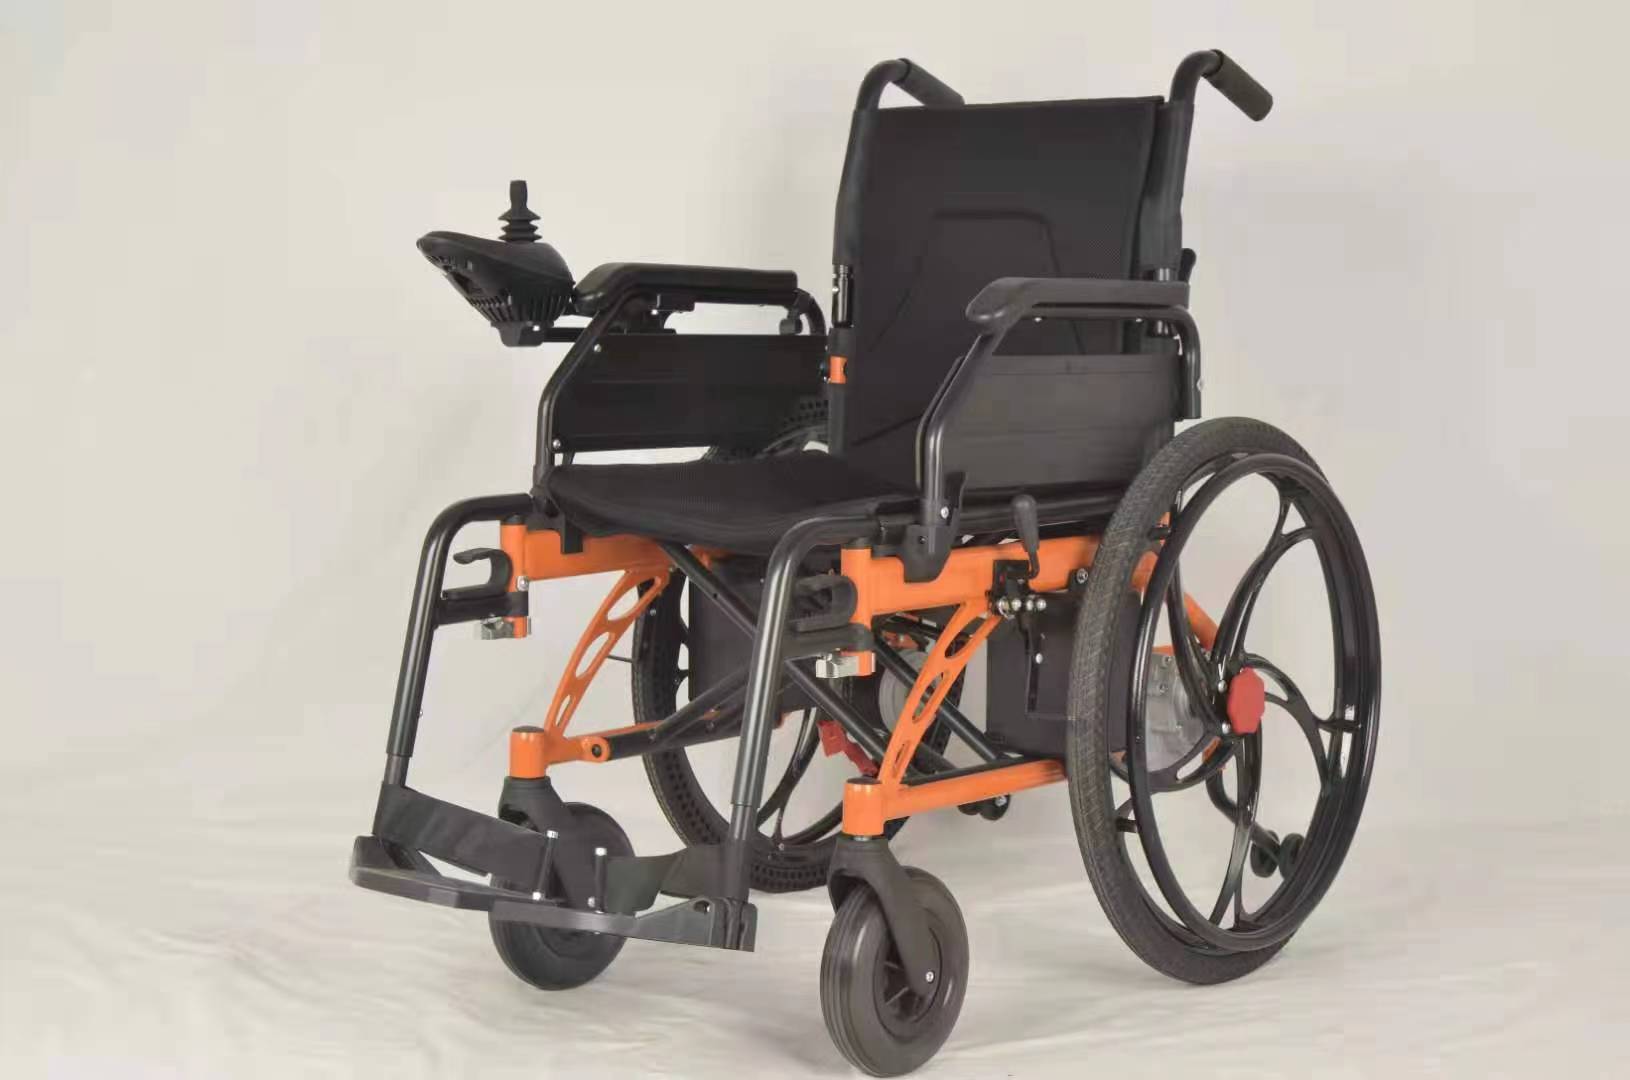 Aircraft Grade Aluminum Alloy power Wheelchair